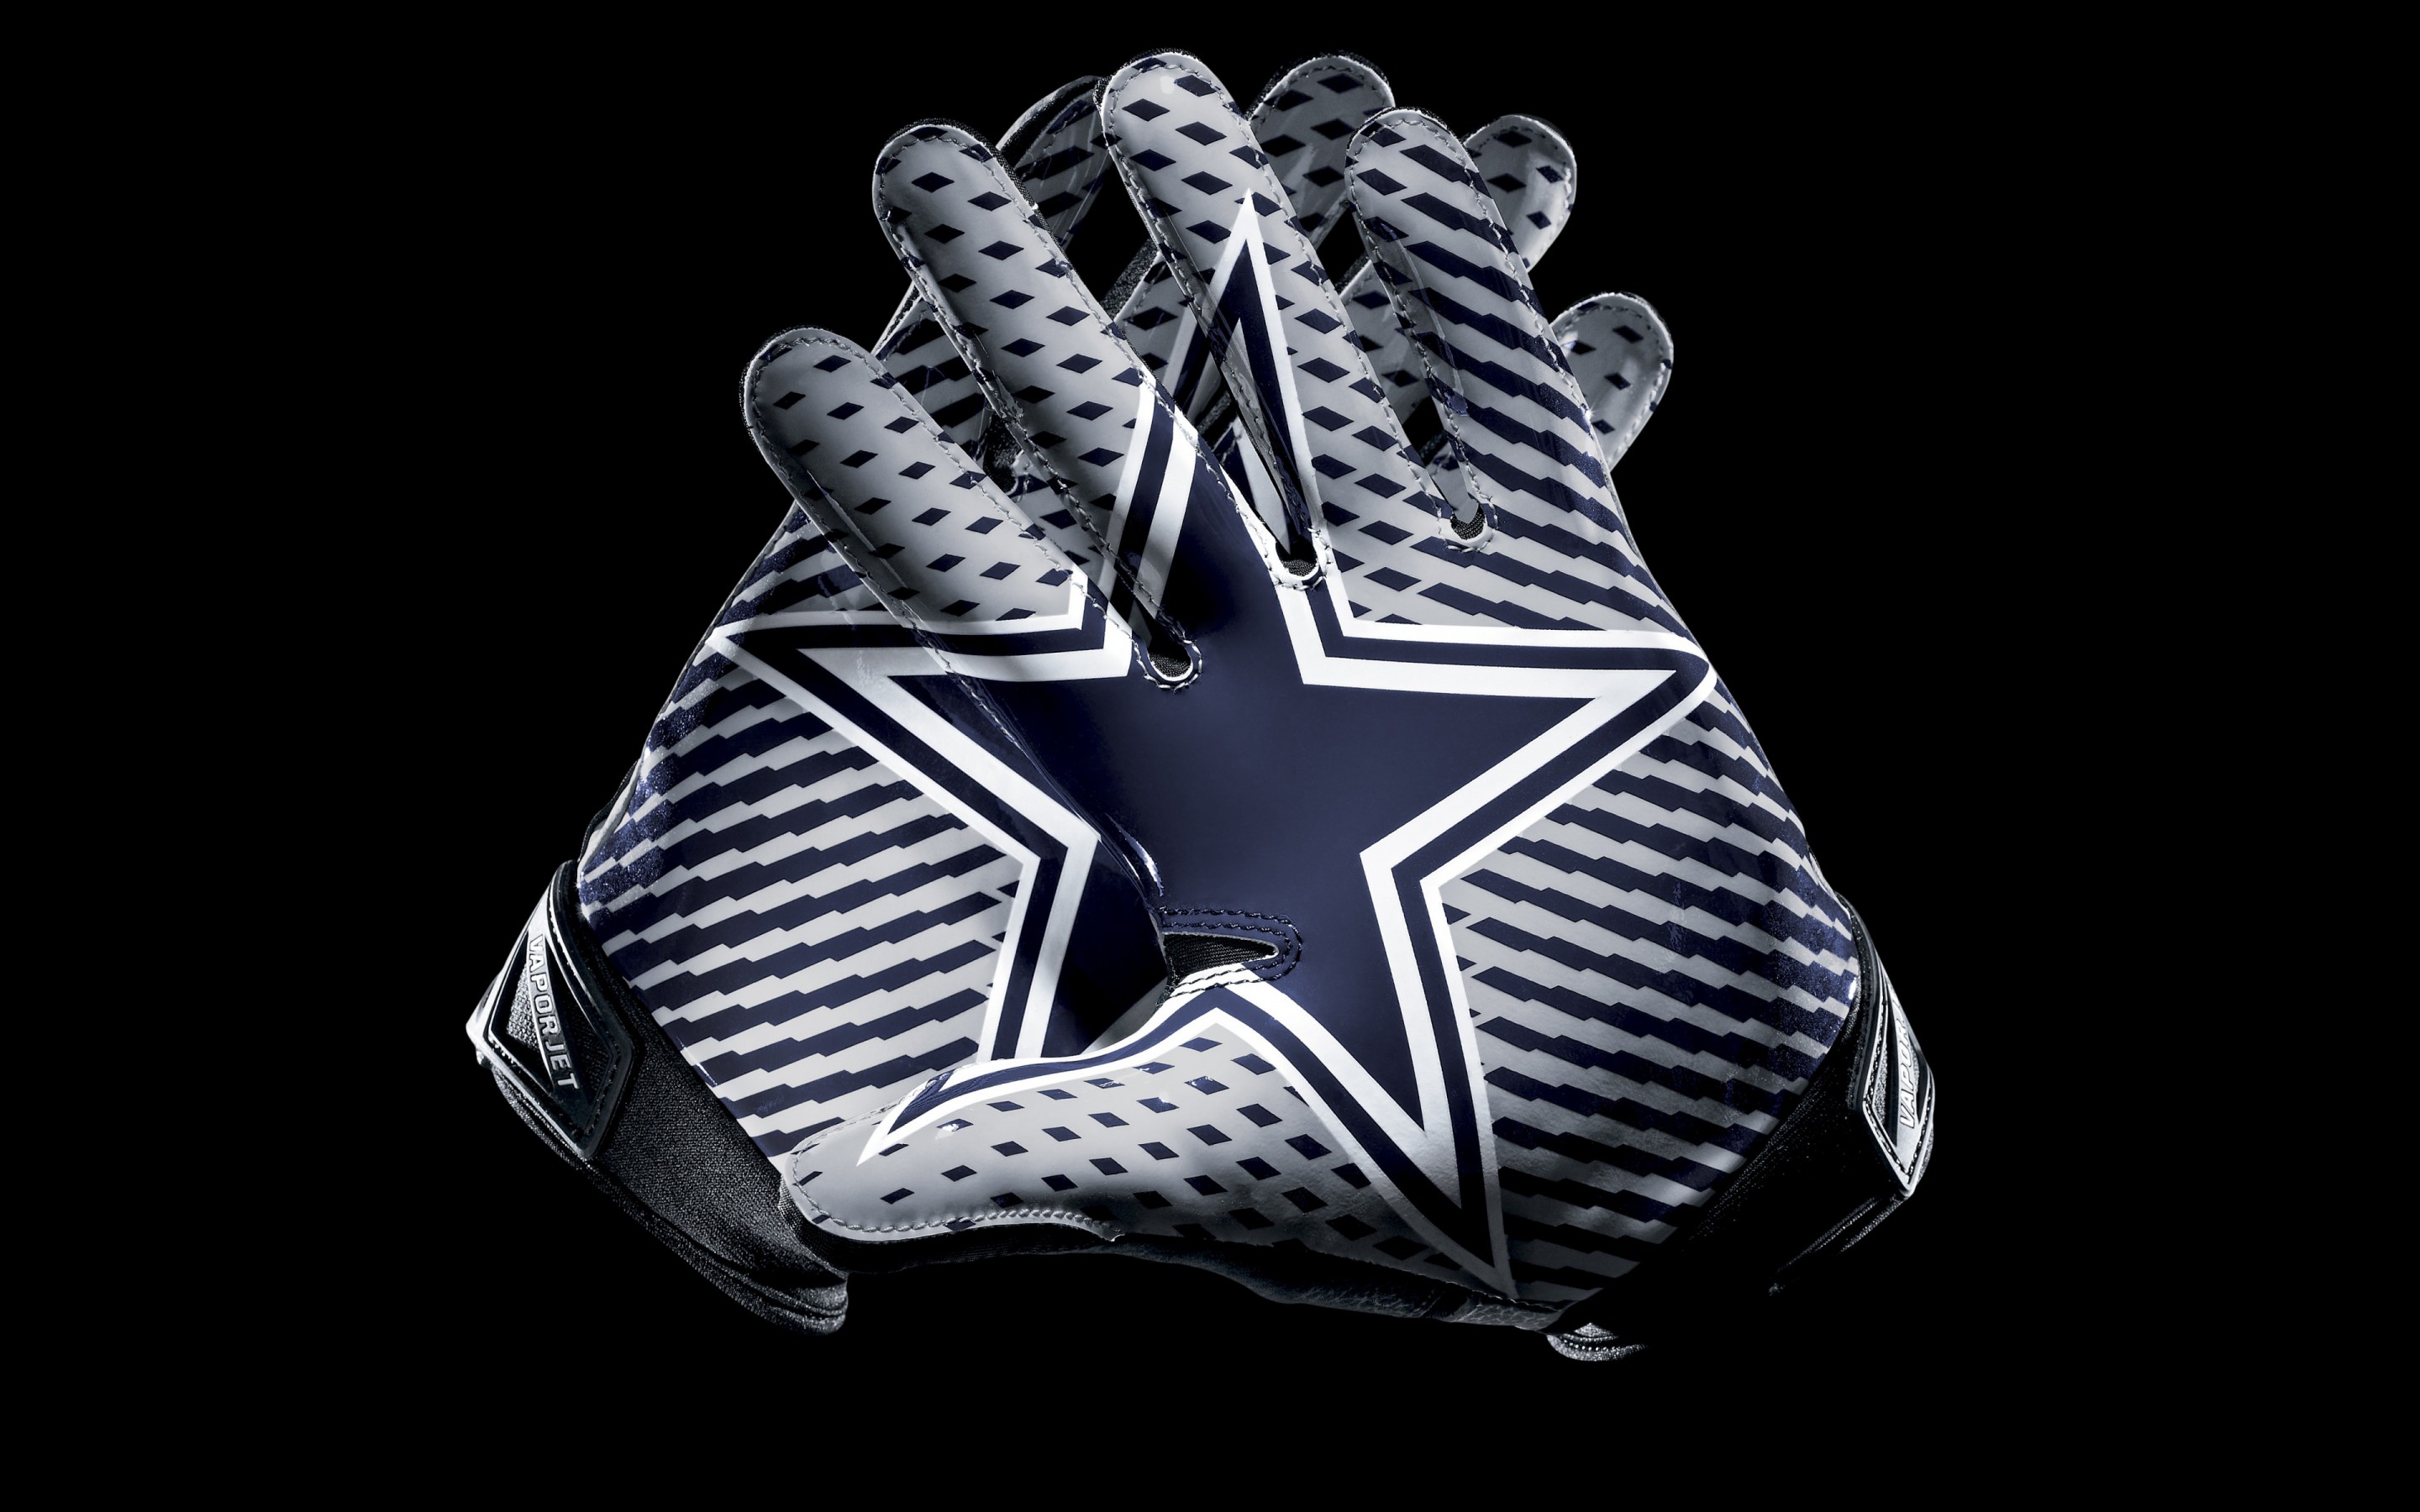 Dallas Cowboys Gloves Wallpaper For Desktop X